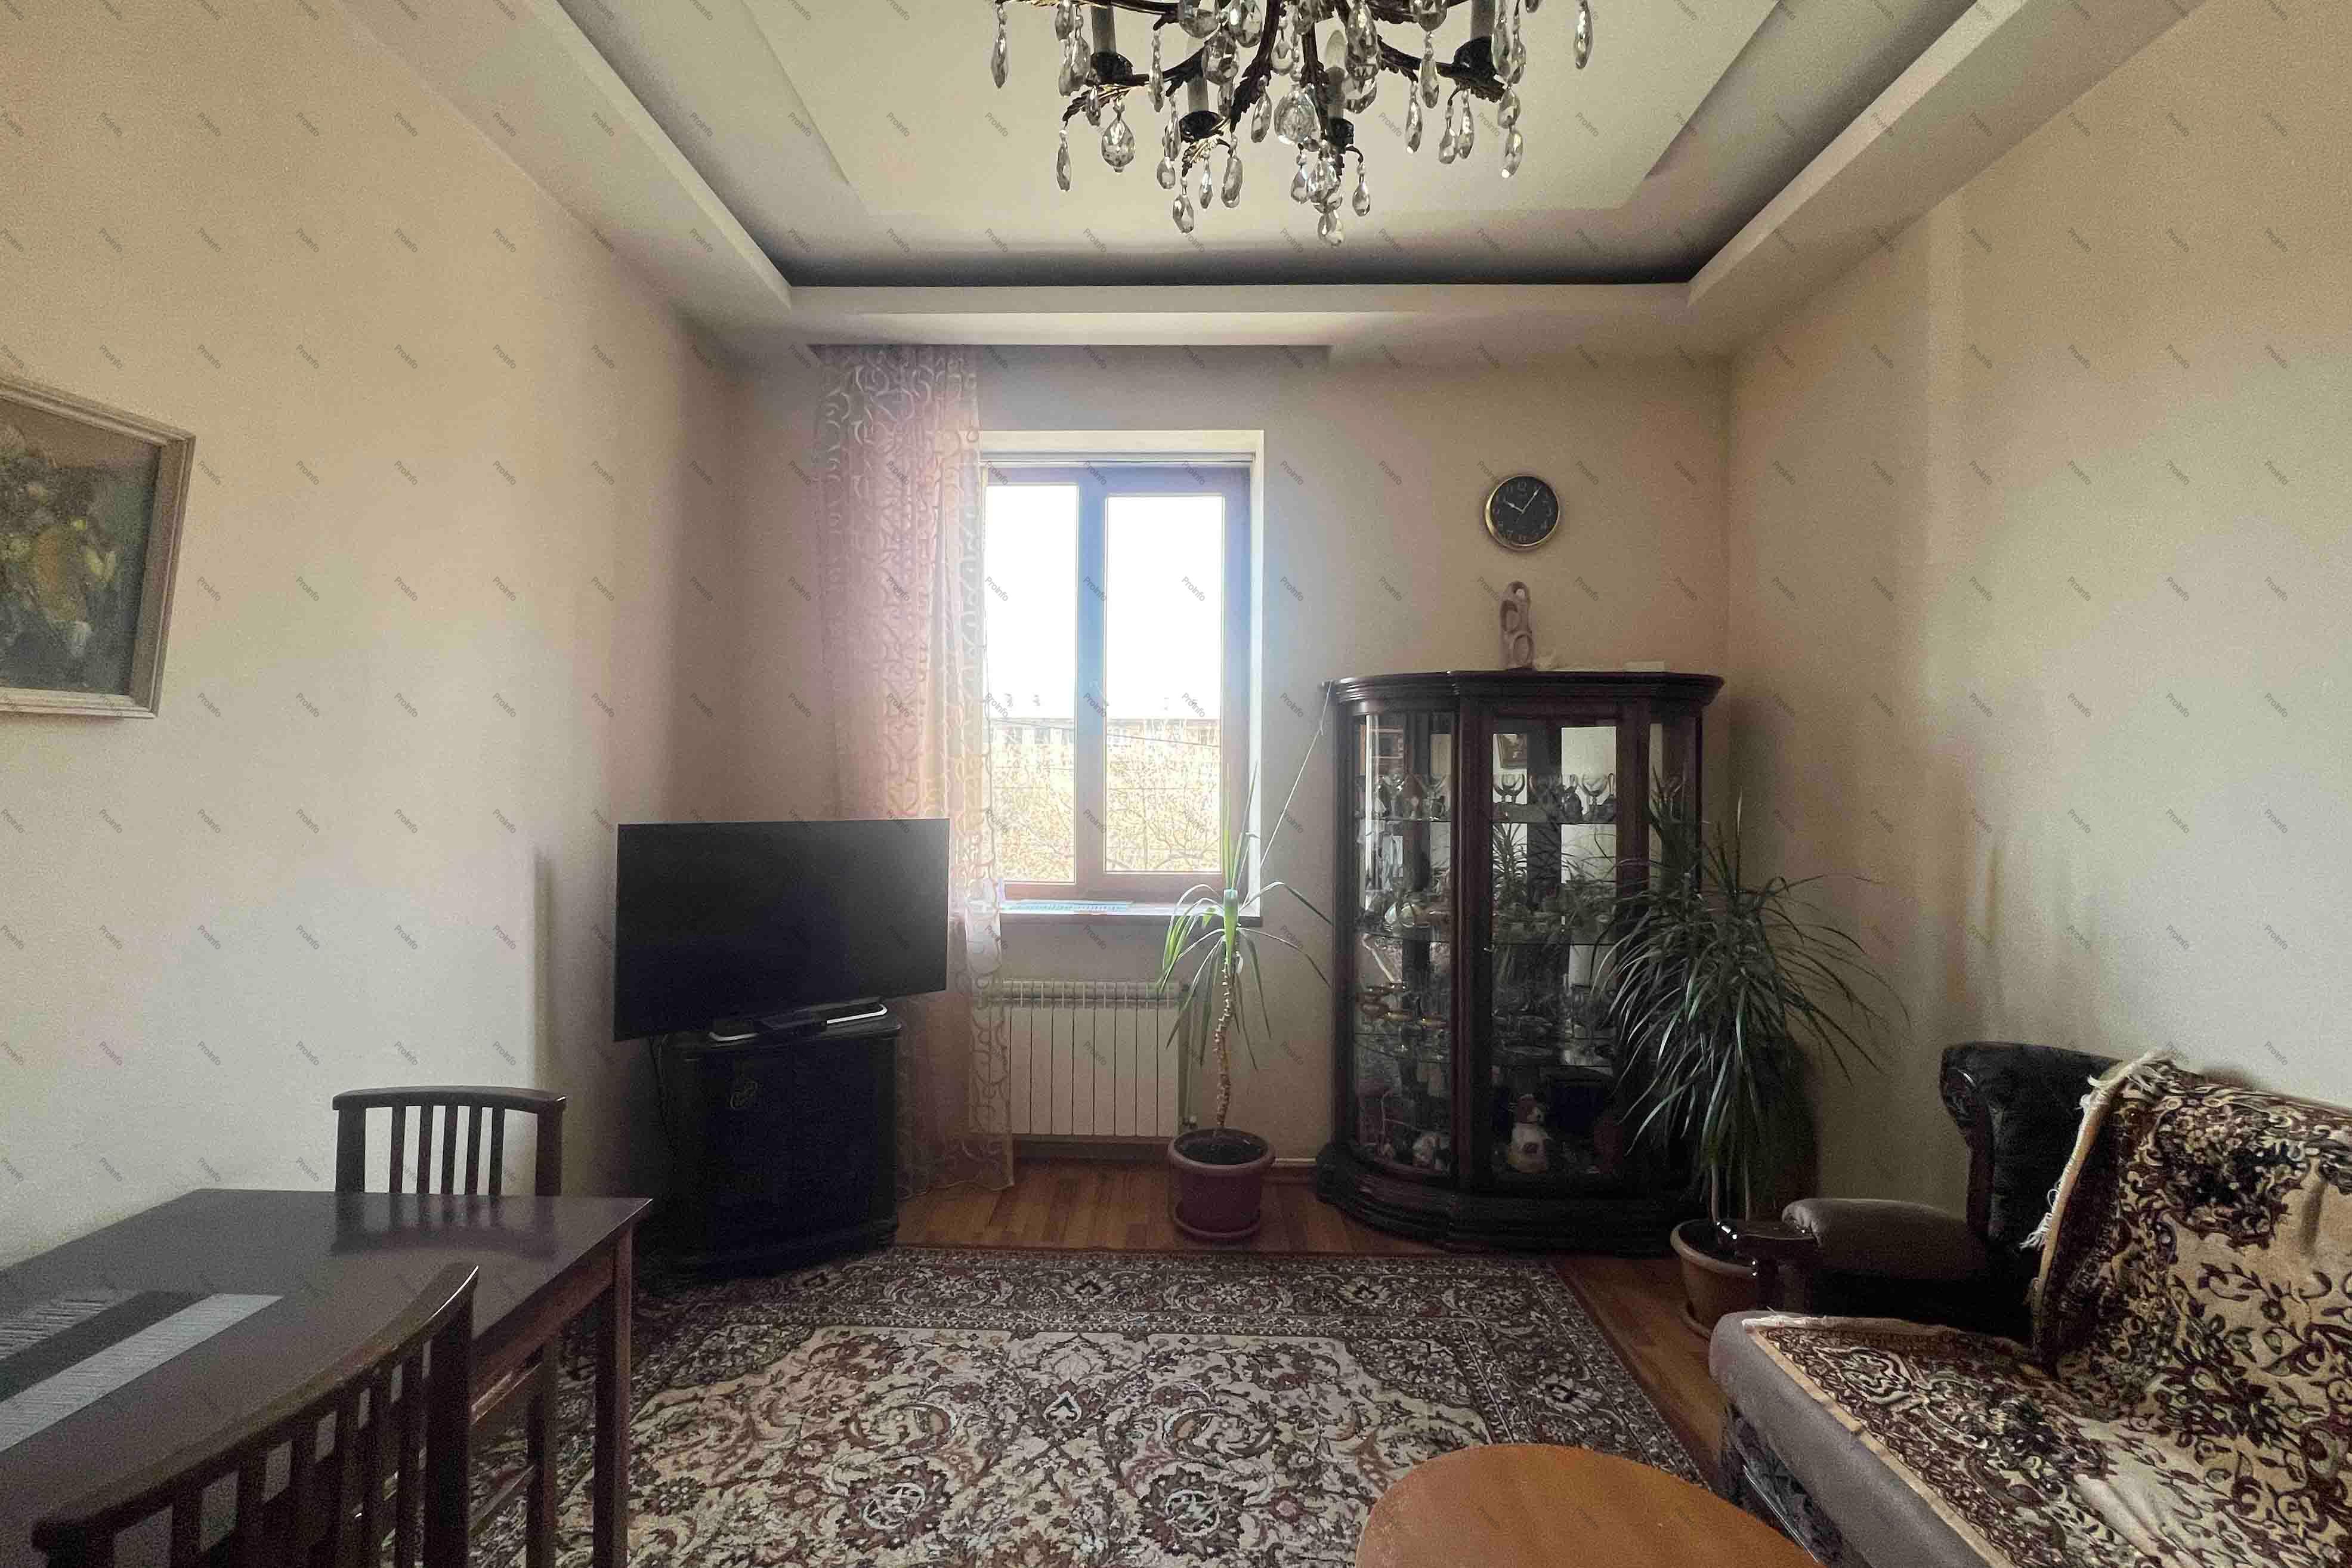 For Sale 3 room Apartments Երևան, Արաբկիր, Մամիկոնյանց